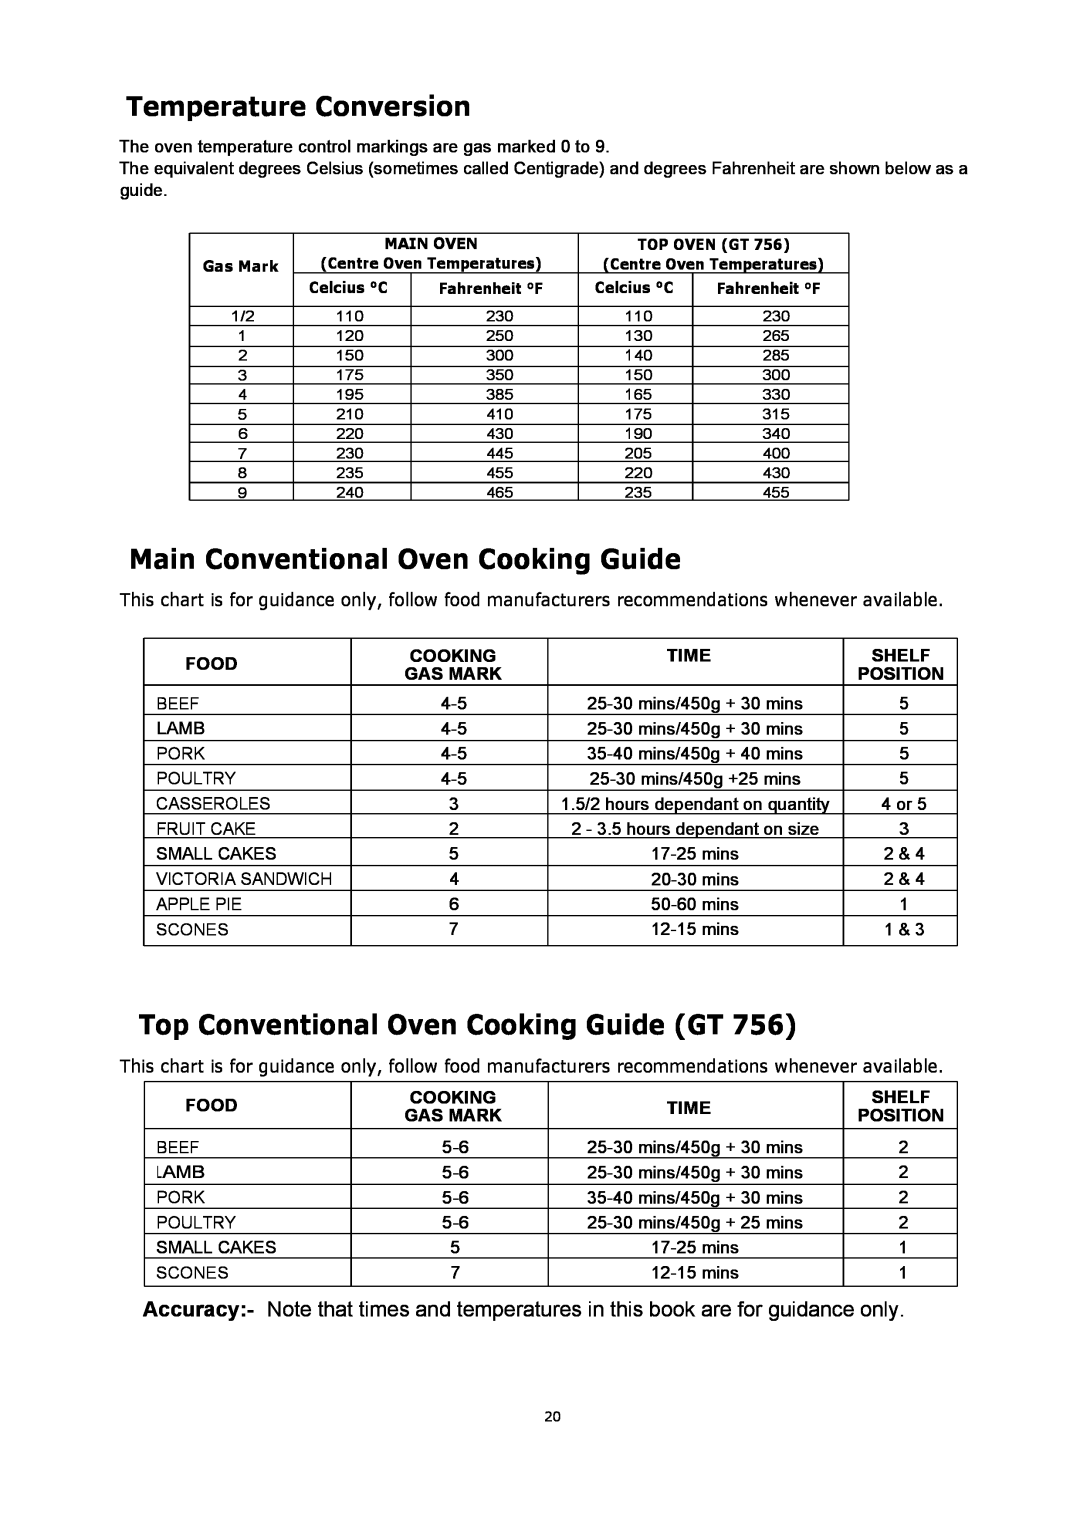 Glen Dimplex Home Appliances Ltd GT 755, GT 756 manual Temperature Conversion, Main Conventional Oven Cooking Guide 